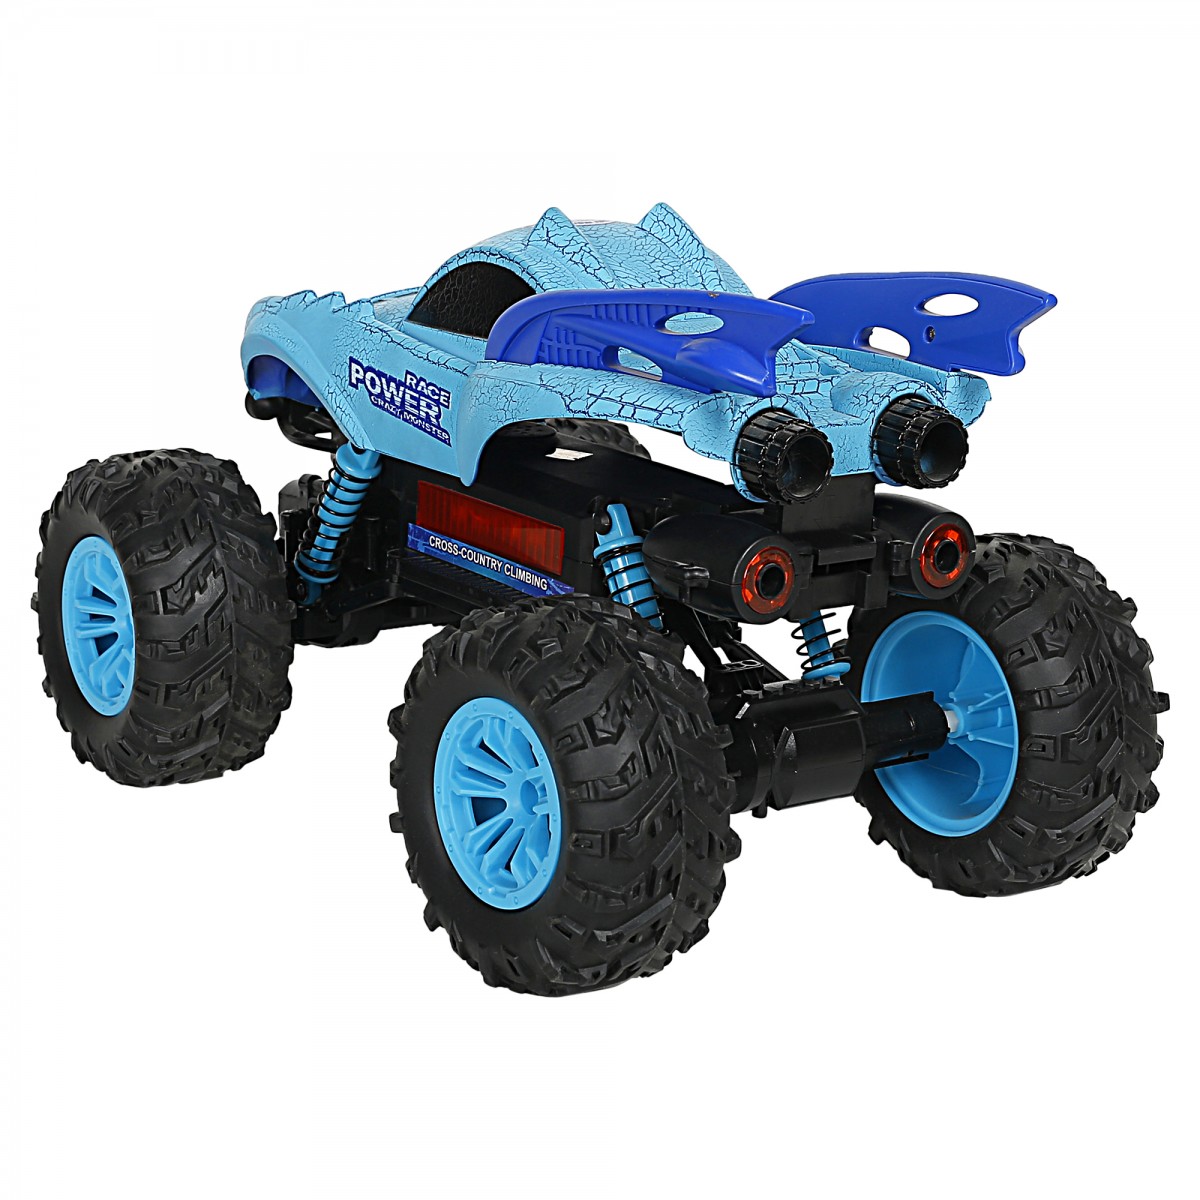 Ralleys Fury Off Roader Remote Control Car for Kids, Blue, 8Y+